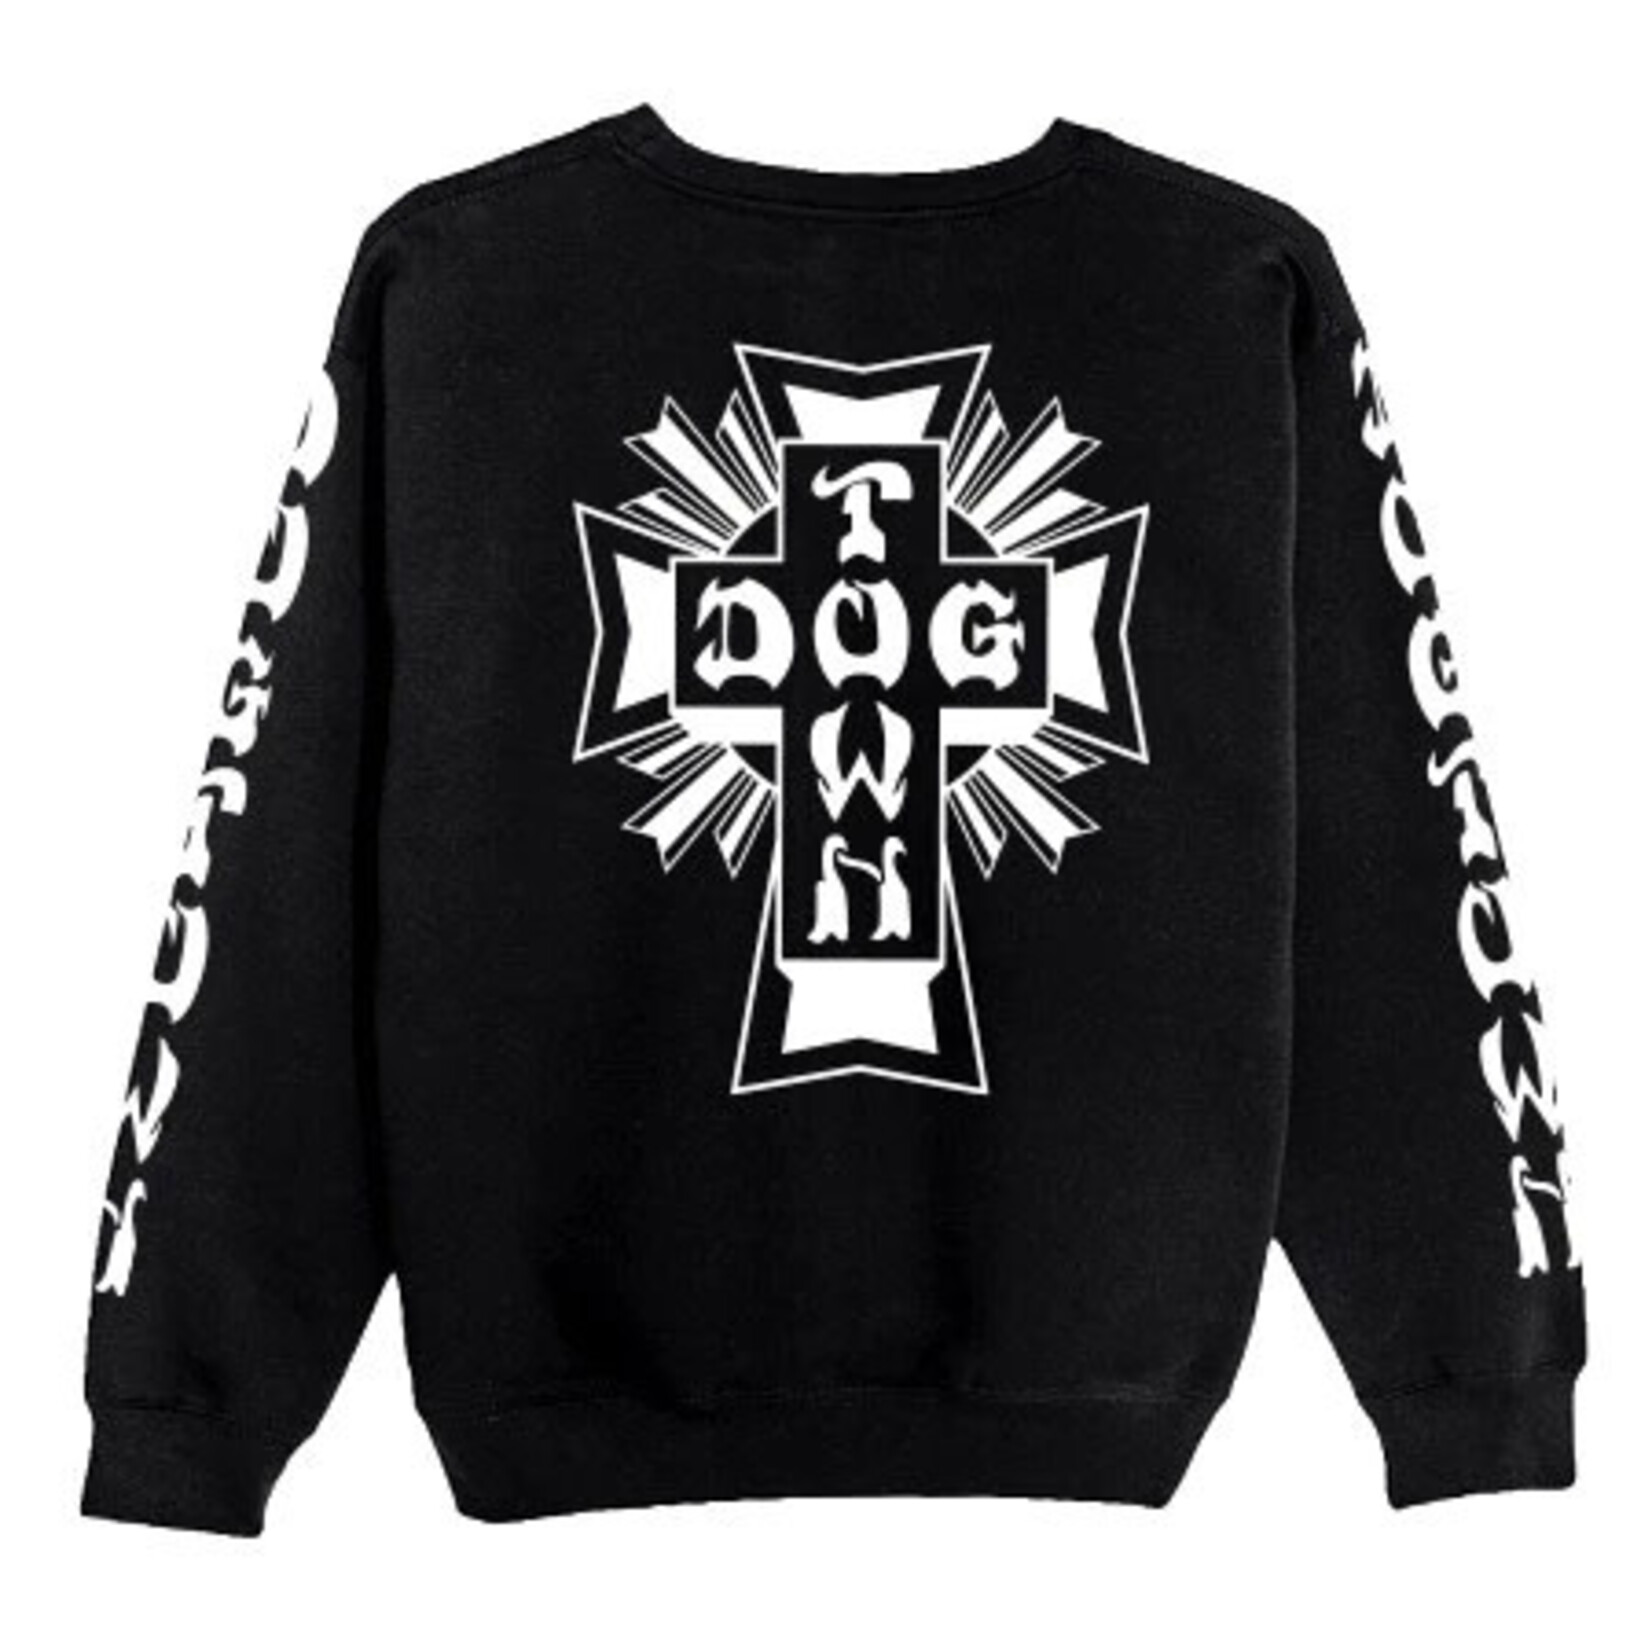 Dogtown Dogtown Cross Logo Crewneck Sweatshirt - Black